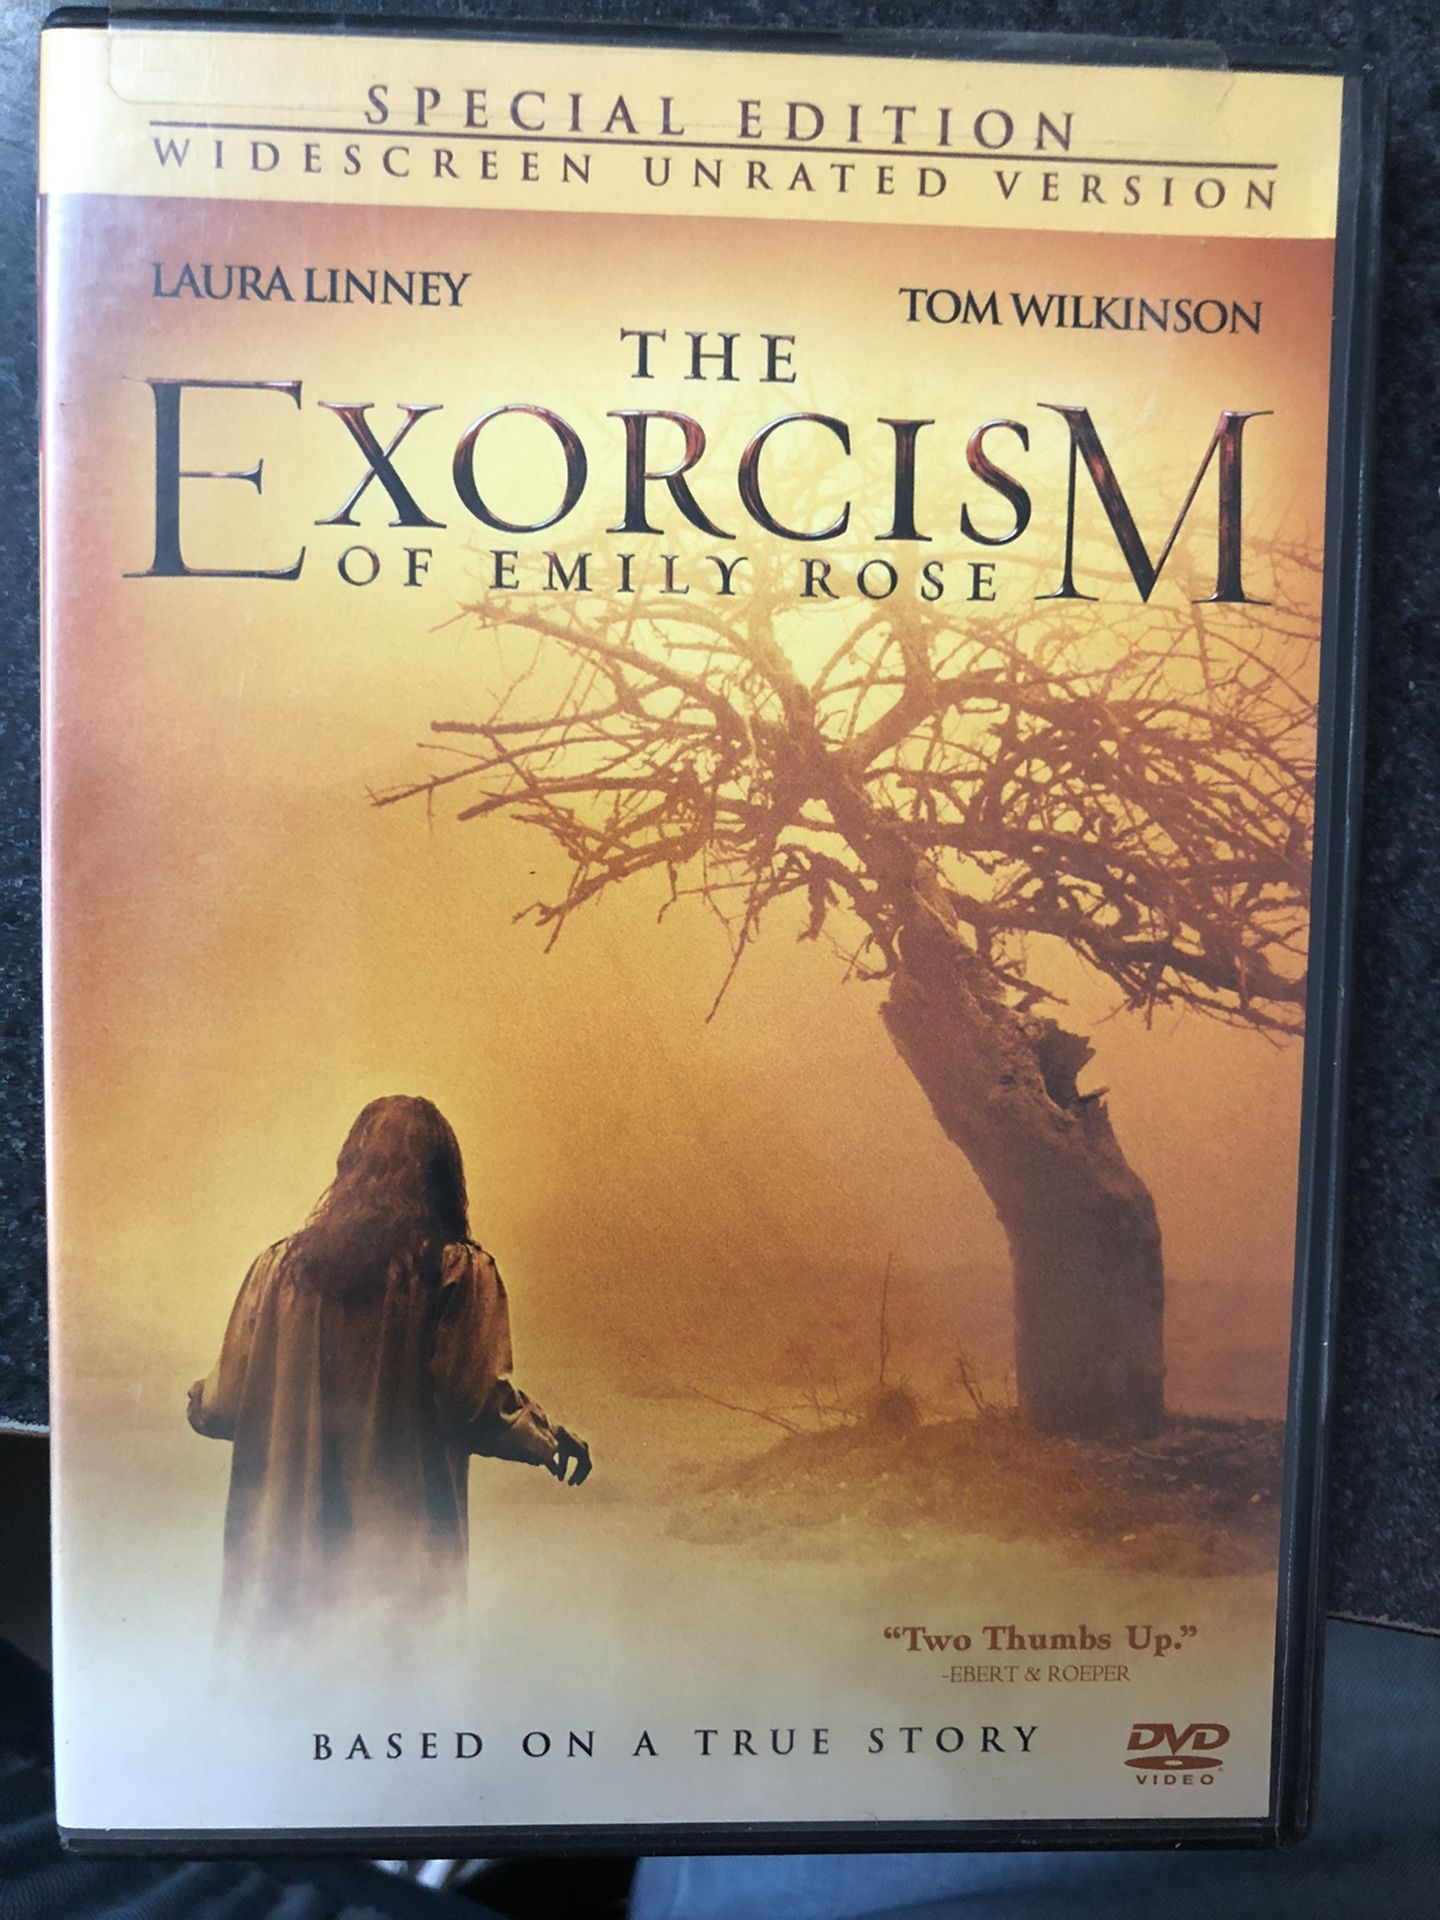 The Exorcism of Emily Rose DVD